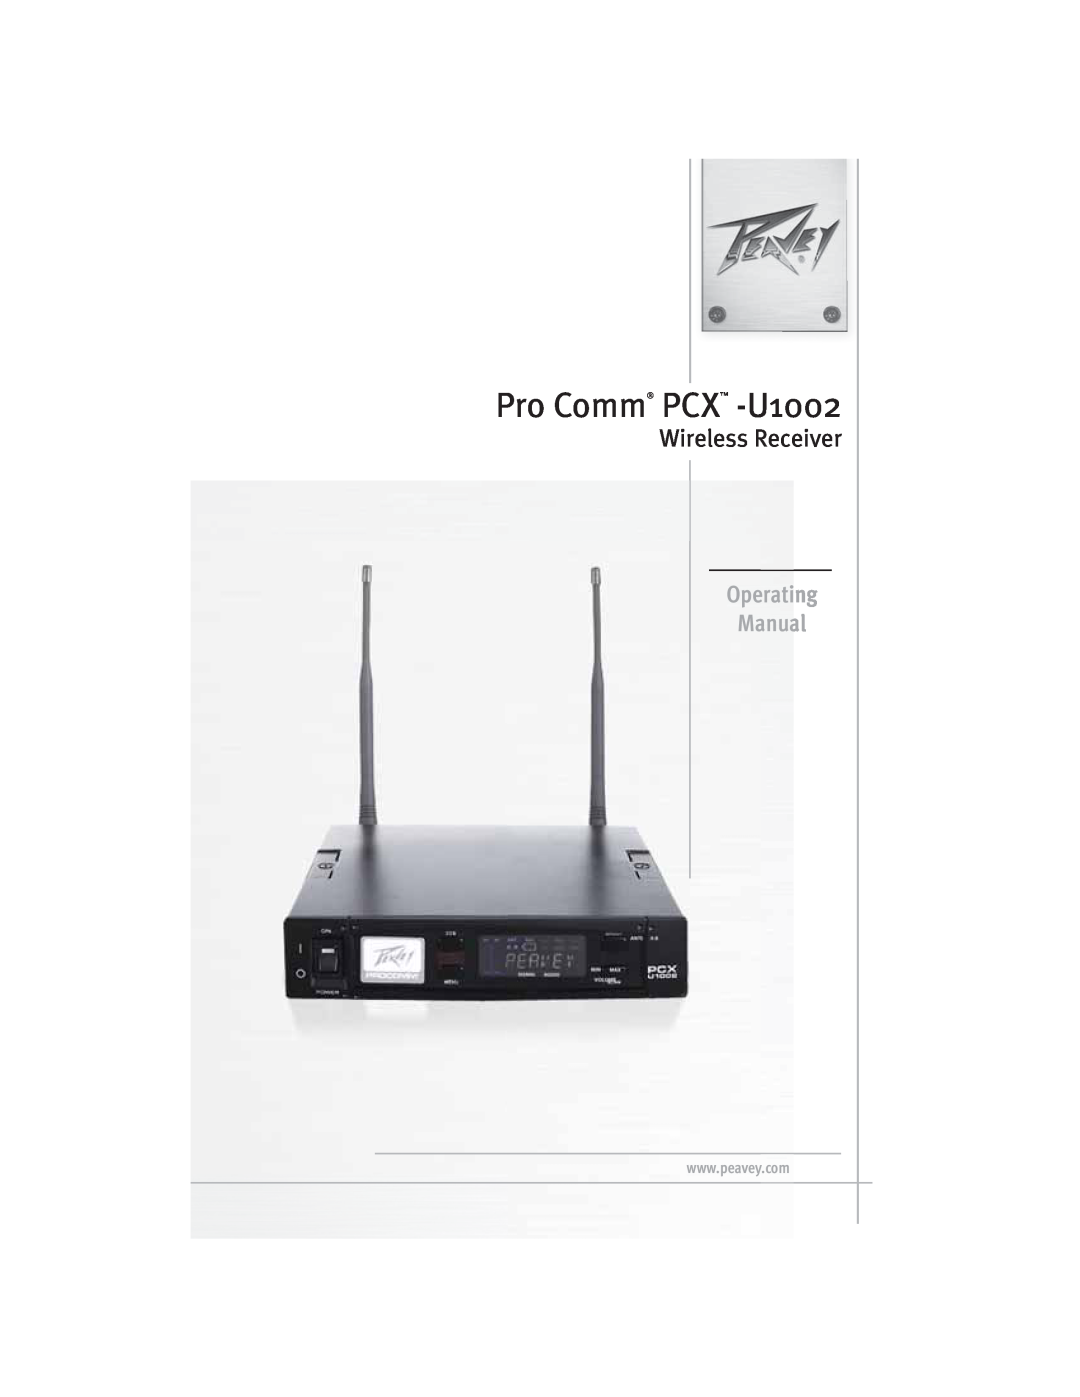 Peavey manual Pro Comm PCX -U1002, Wireless Receiver, Operating Manual 